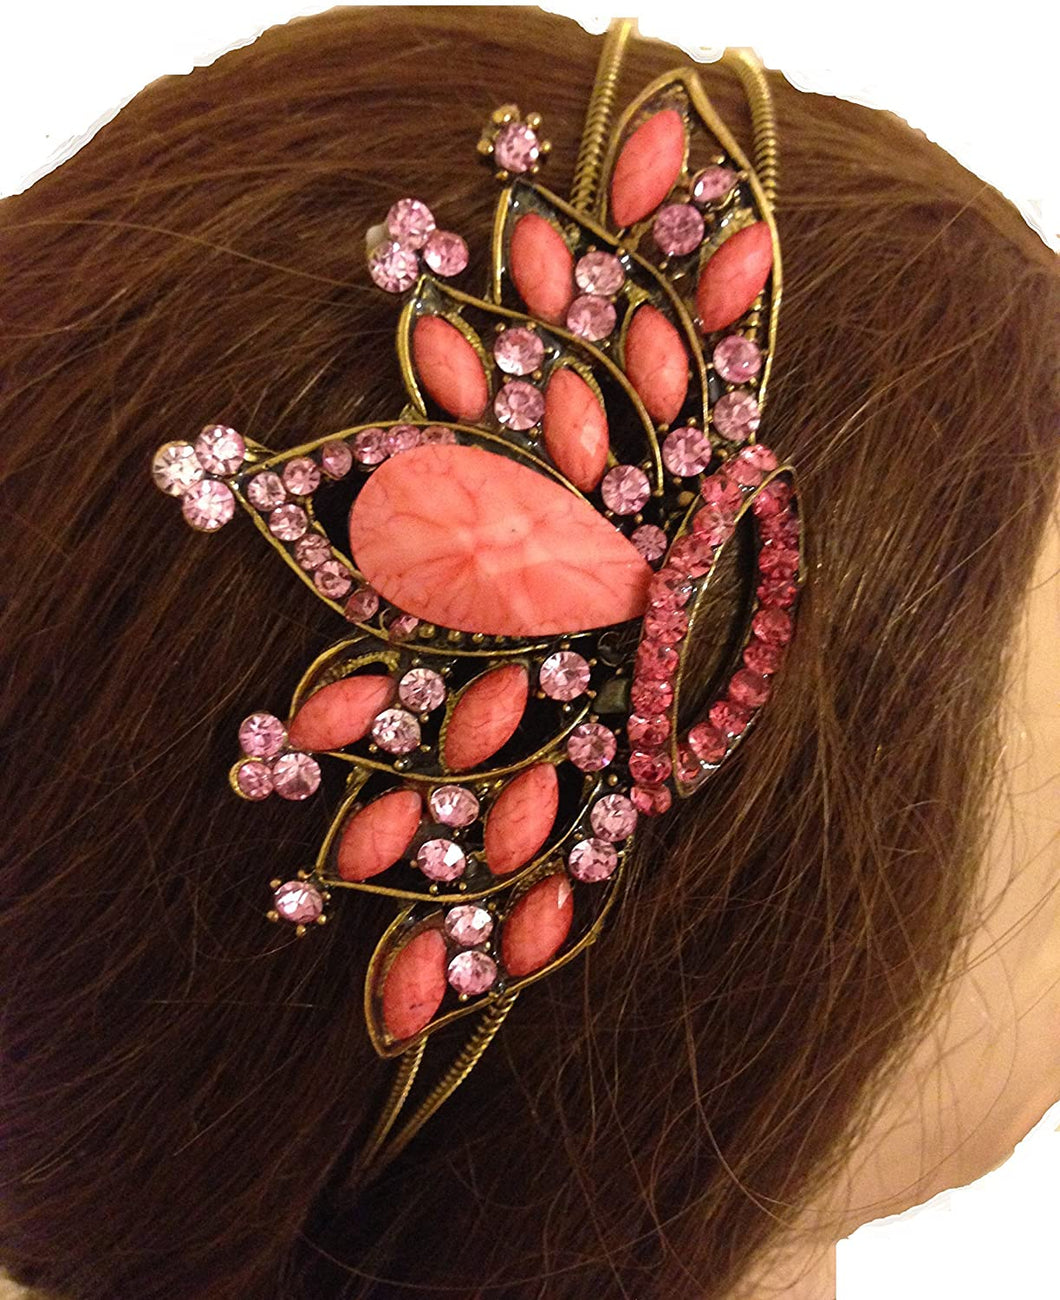 Pink/peachy crown design aliceband, headband with pretty stone